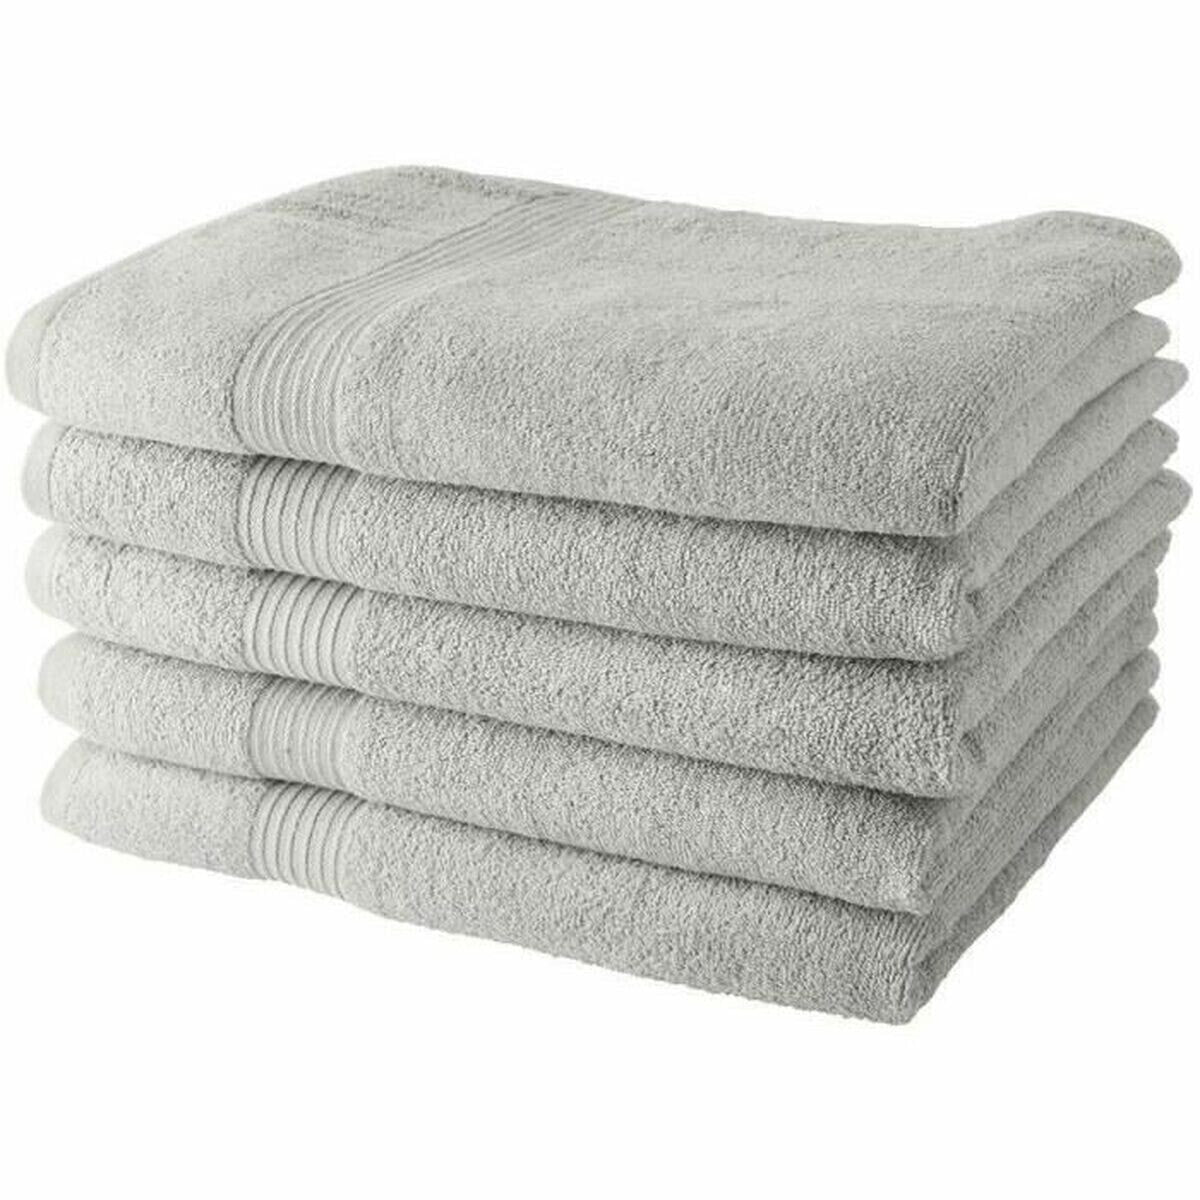 Towel set TODAY White 5 Pieces 70 x 130 cm